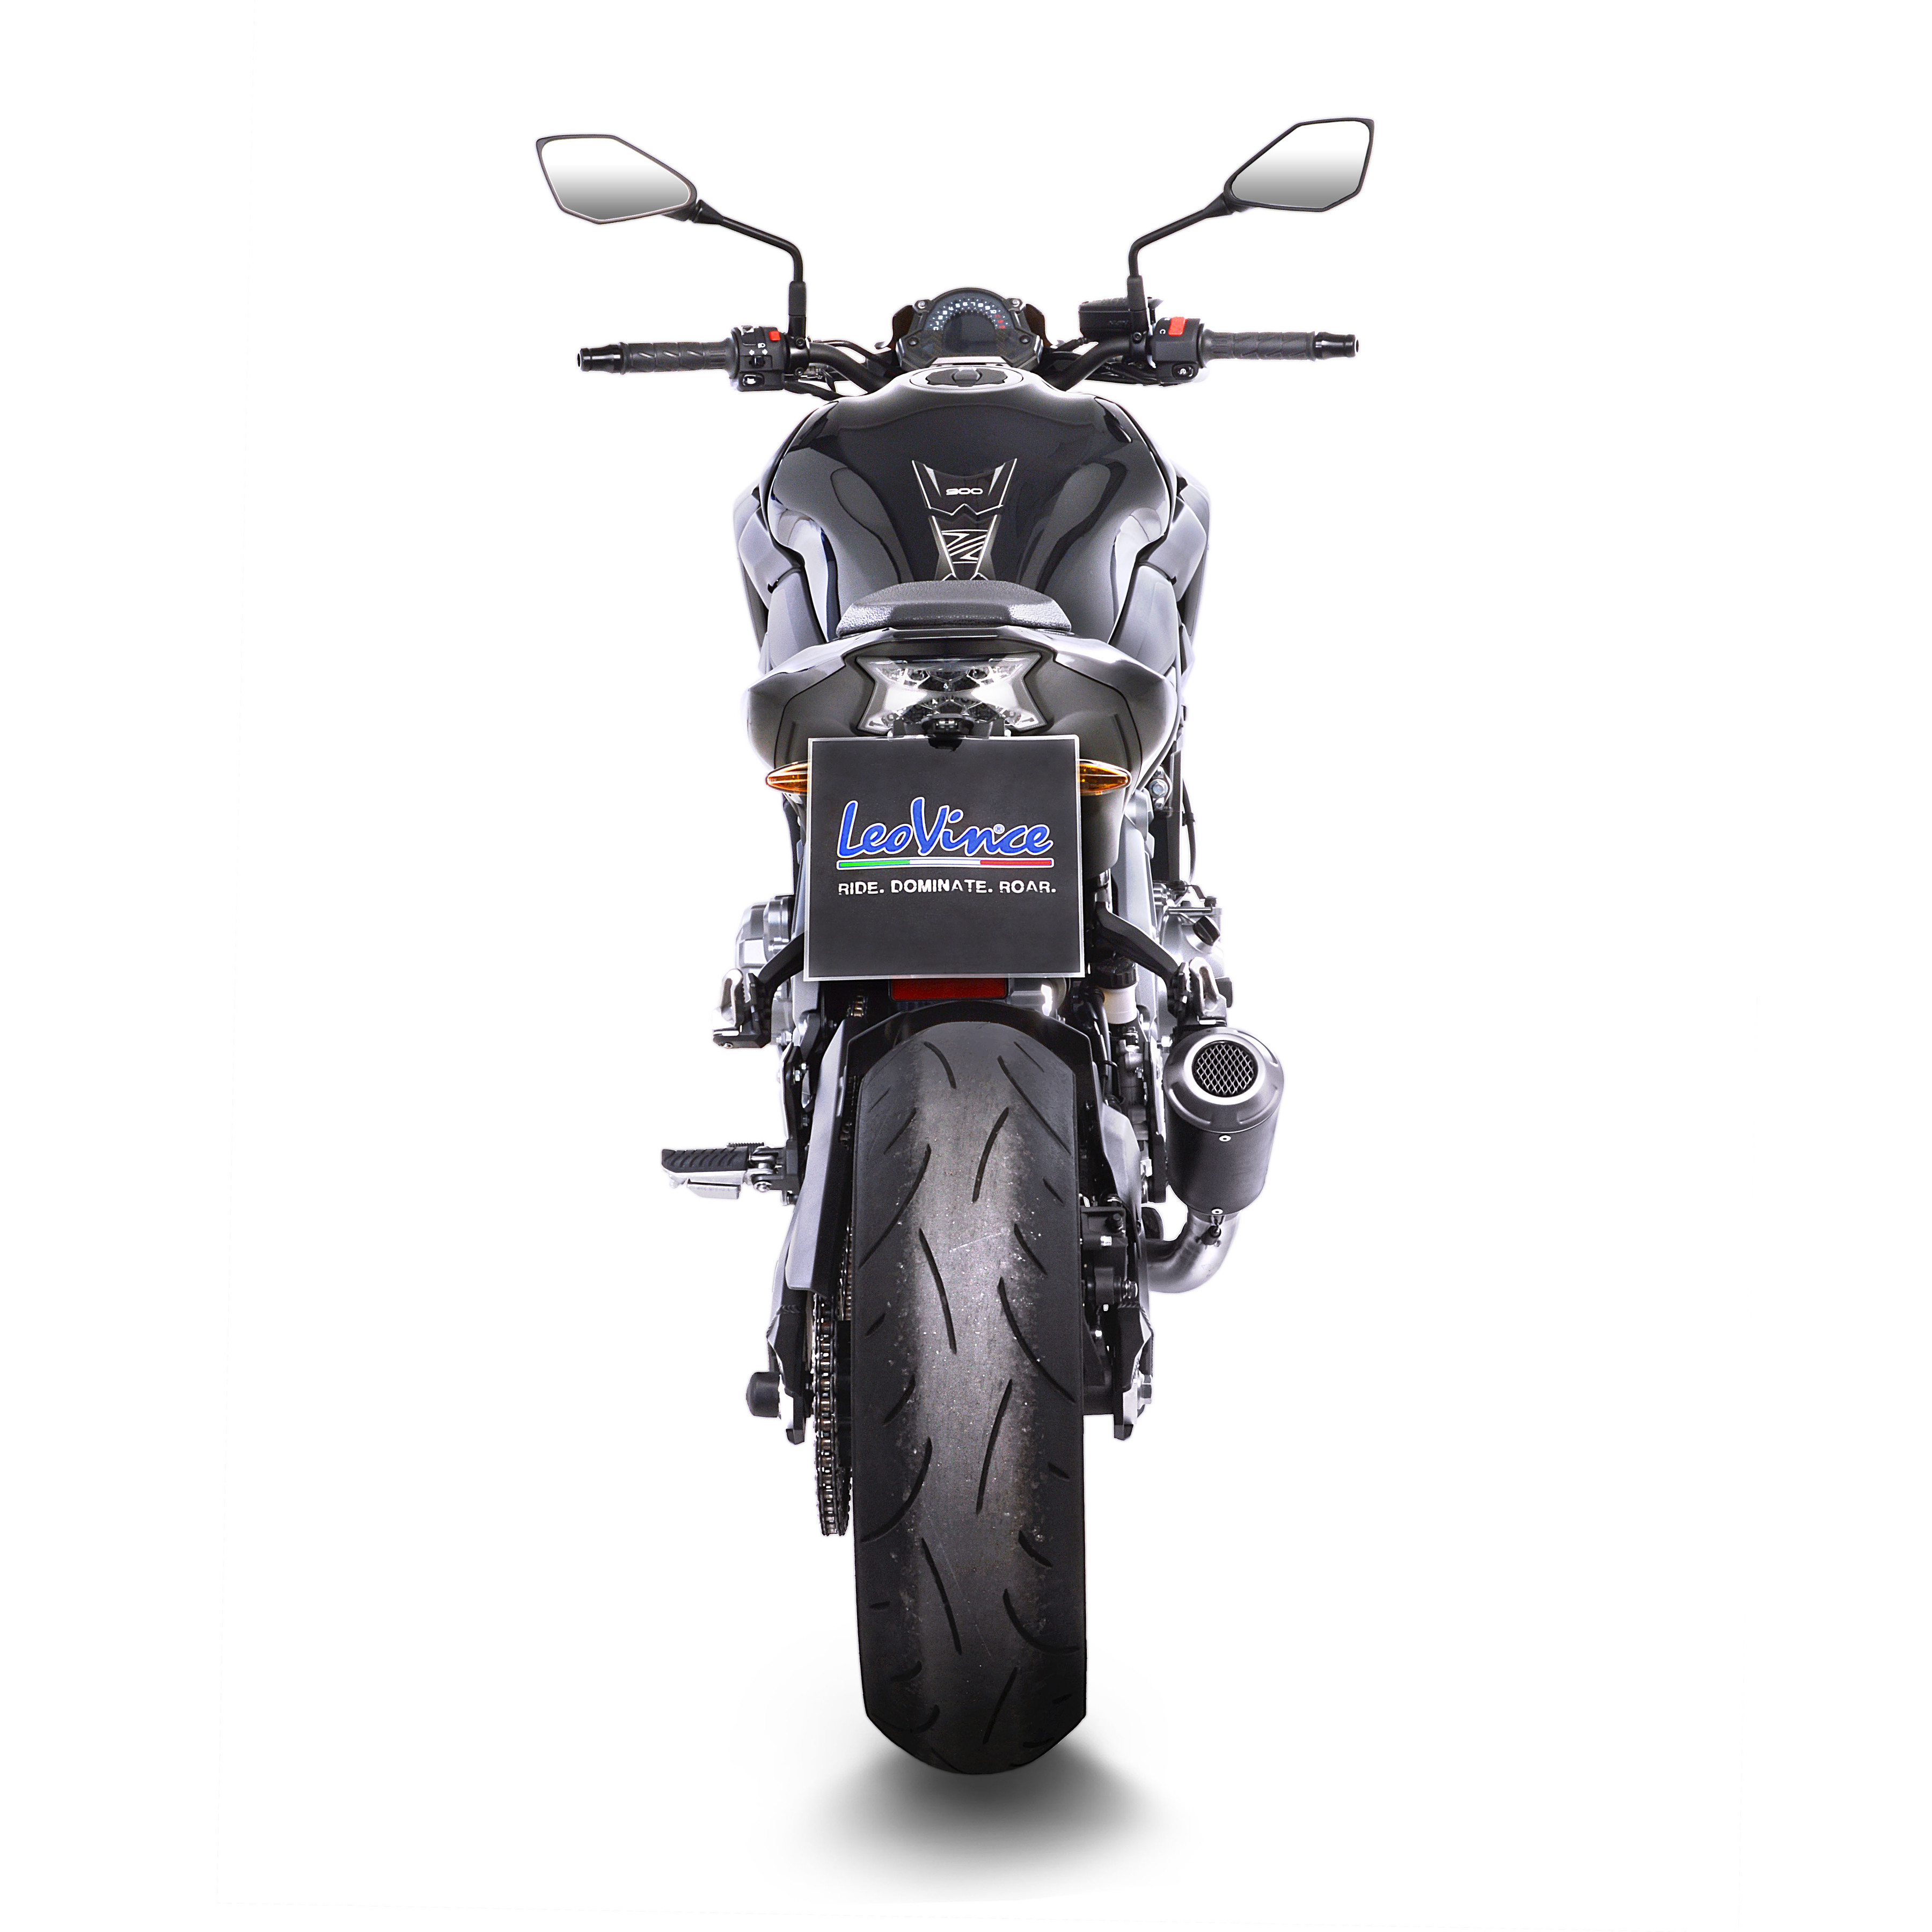 LV-10 Black Stainless Steel Slip On Exhaust Muffler - For 16-18 Honda CB500F/X & CBR500R - Click Image to Close